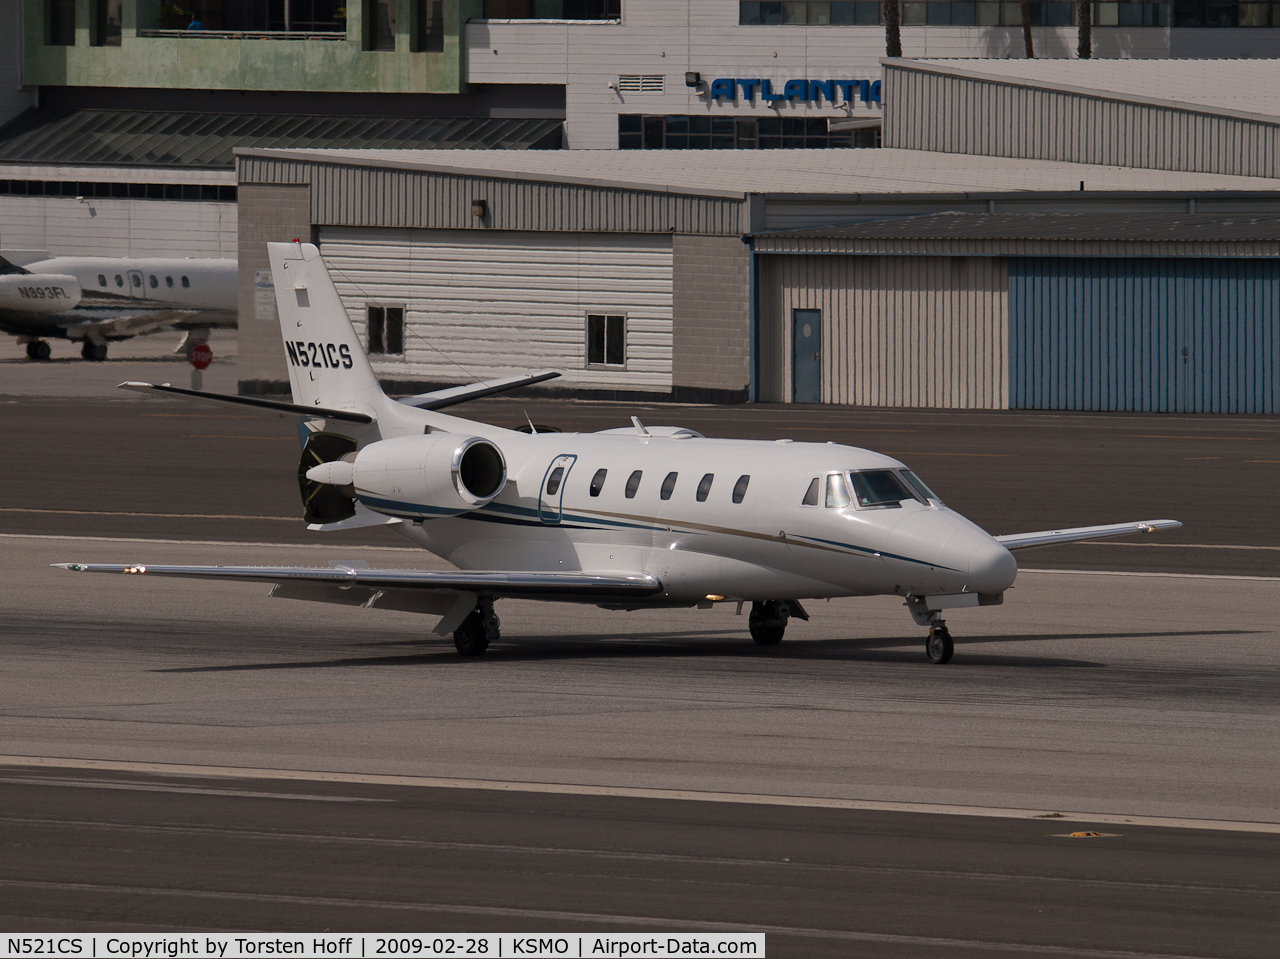 N521CS, 2004 Cessna 560XL Citation Excel C/N 560-5362, N521CS arriving on RWY 03